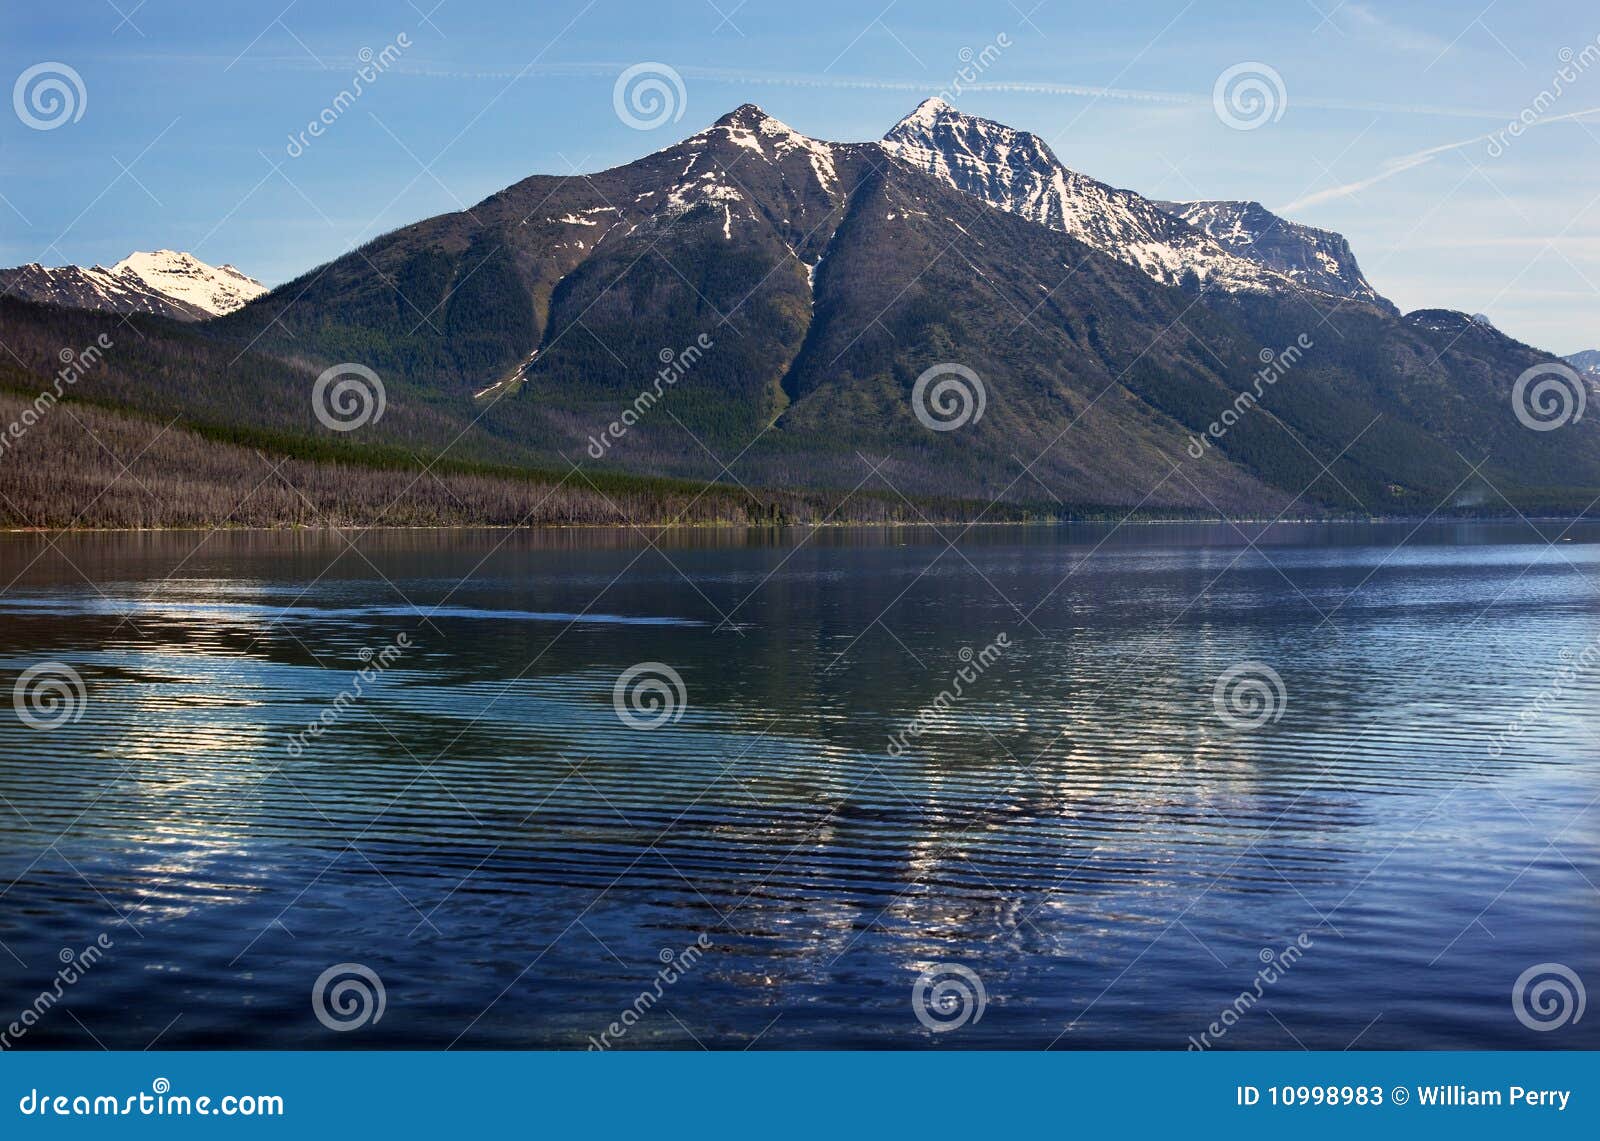 lake mcdonald mountain reflection glacier montana